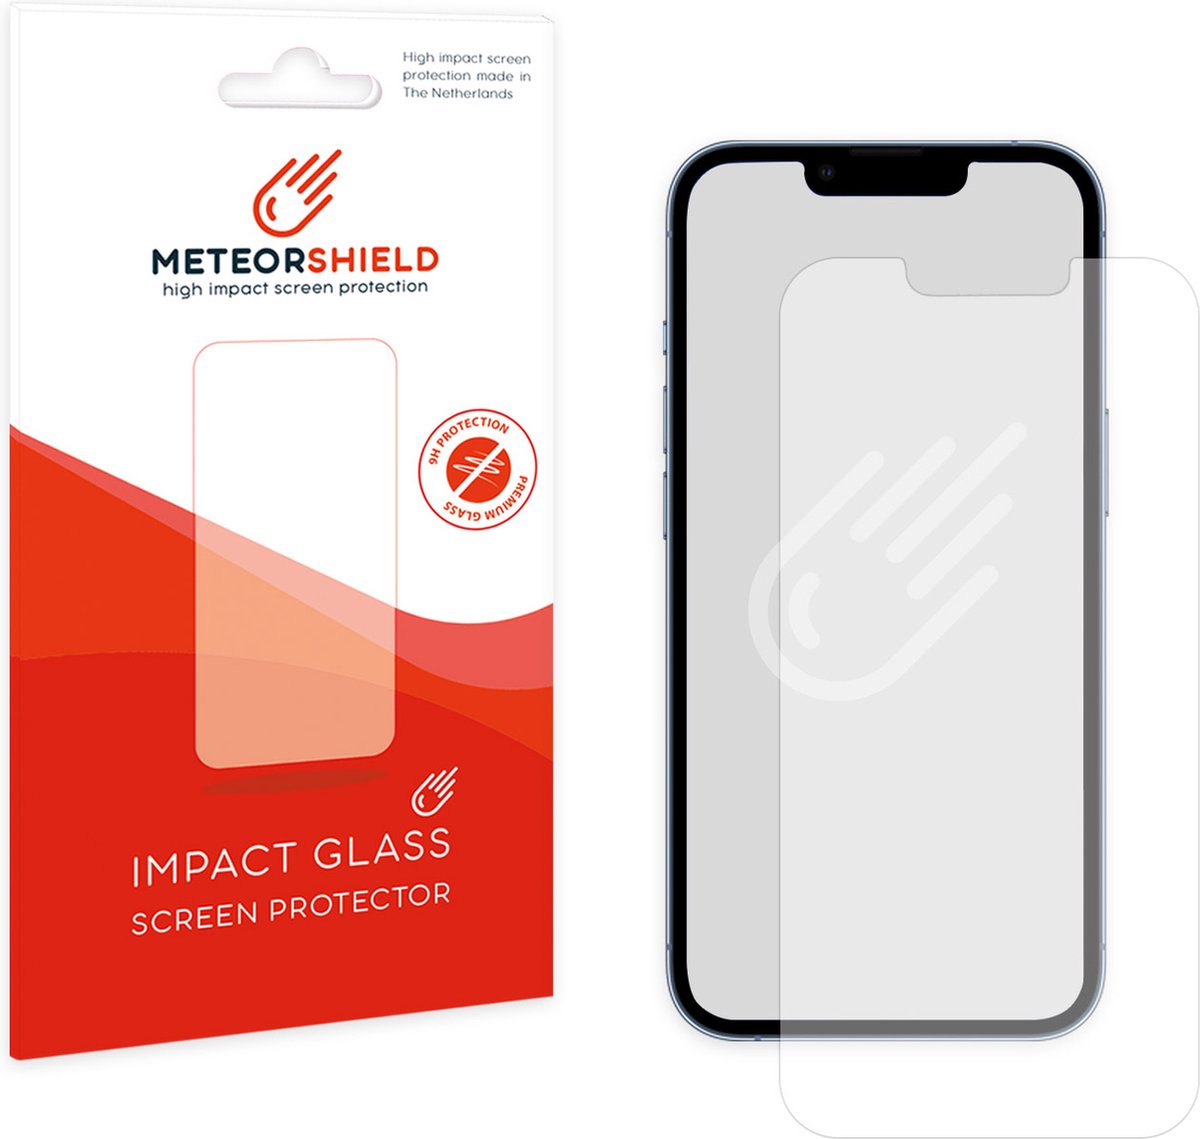 Meteorshield iPhone 13 Pro Max screenprotector - Ultra clear impact glass